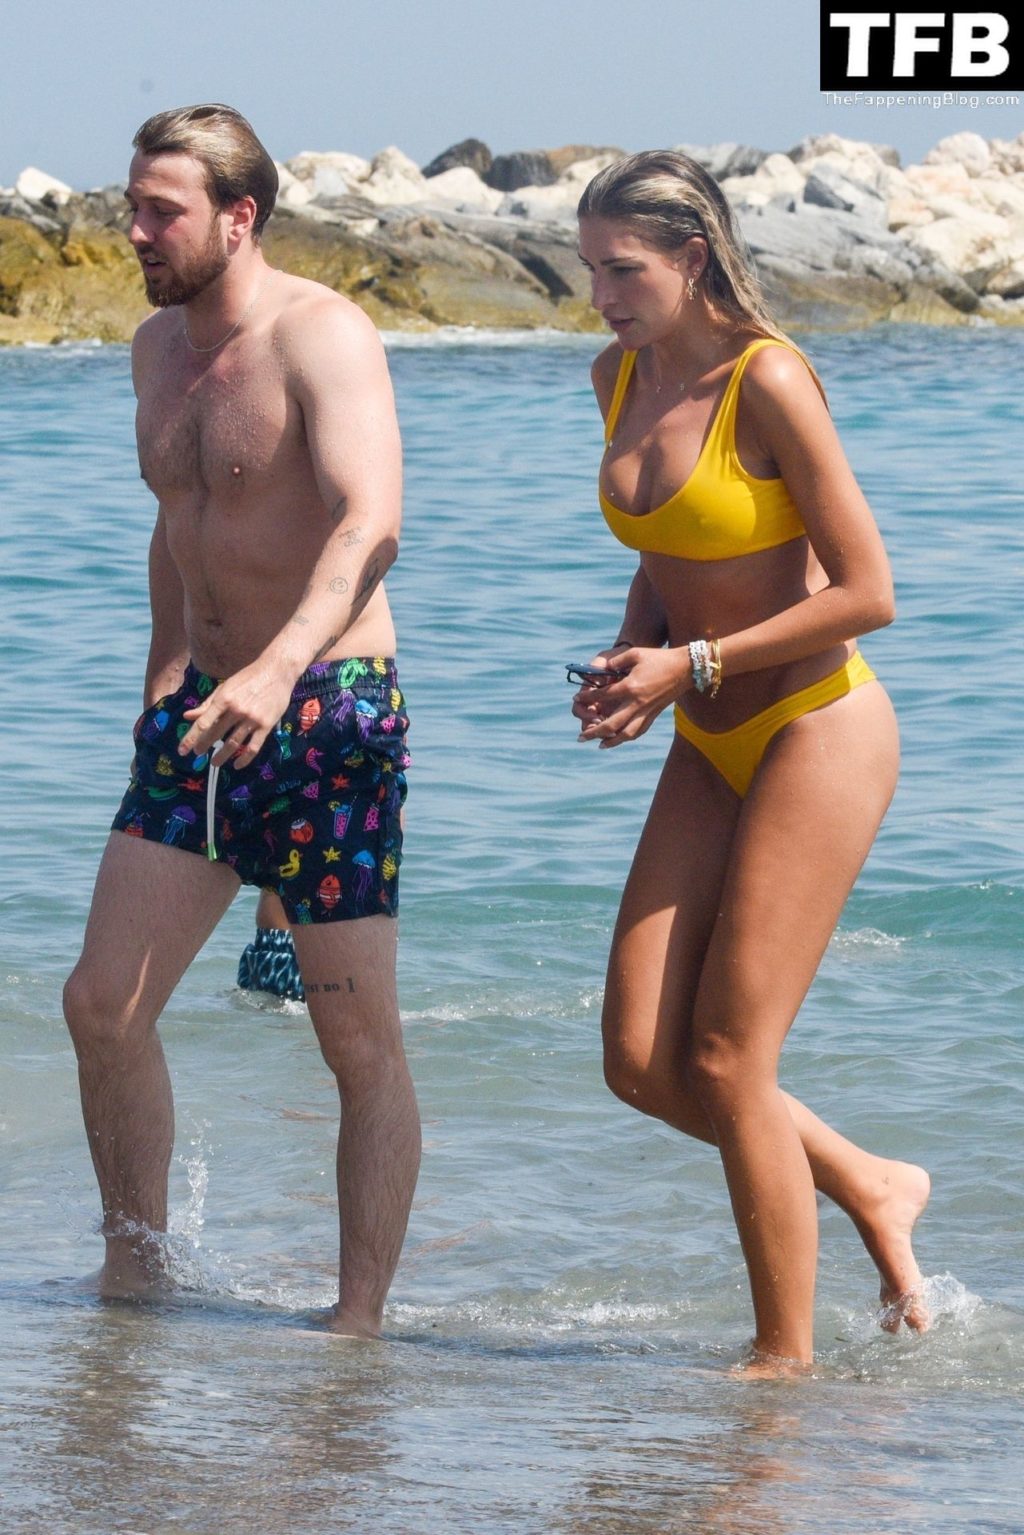 Zara Mcdermott &amp; Sam Thompson Pack on the PDA on the Beaches of Marbella (86 Photos)